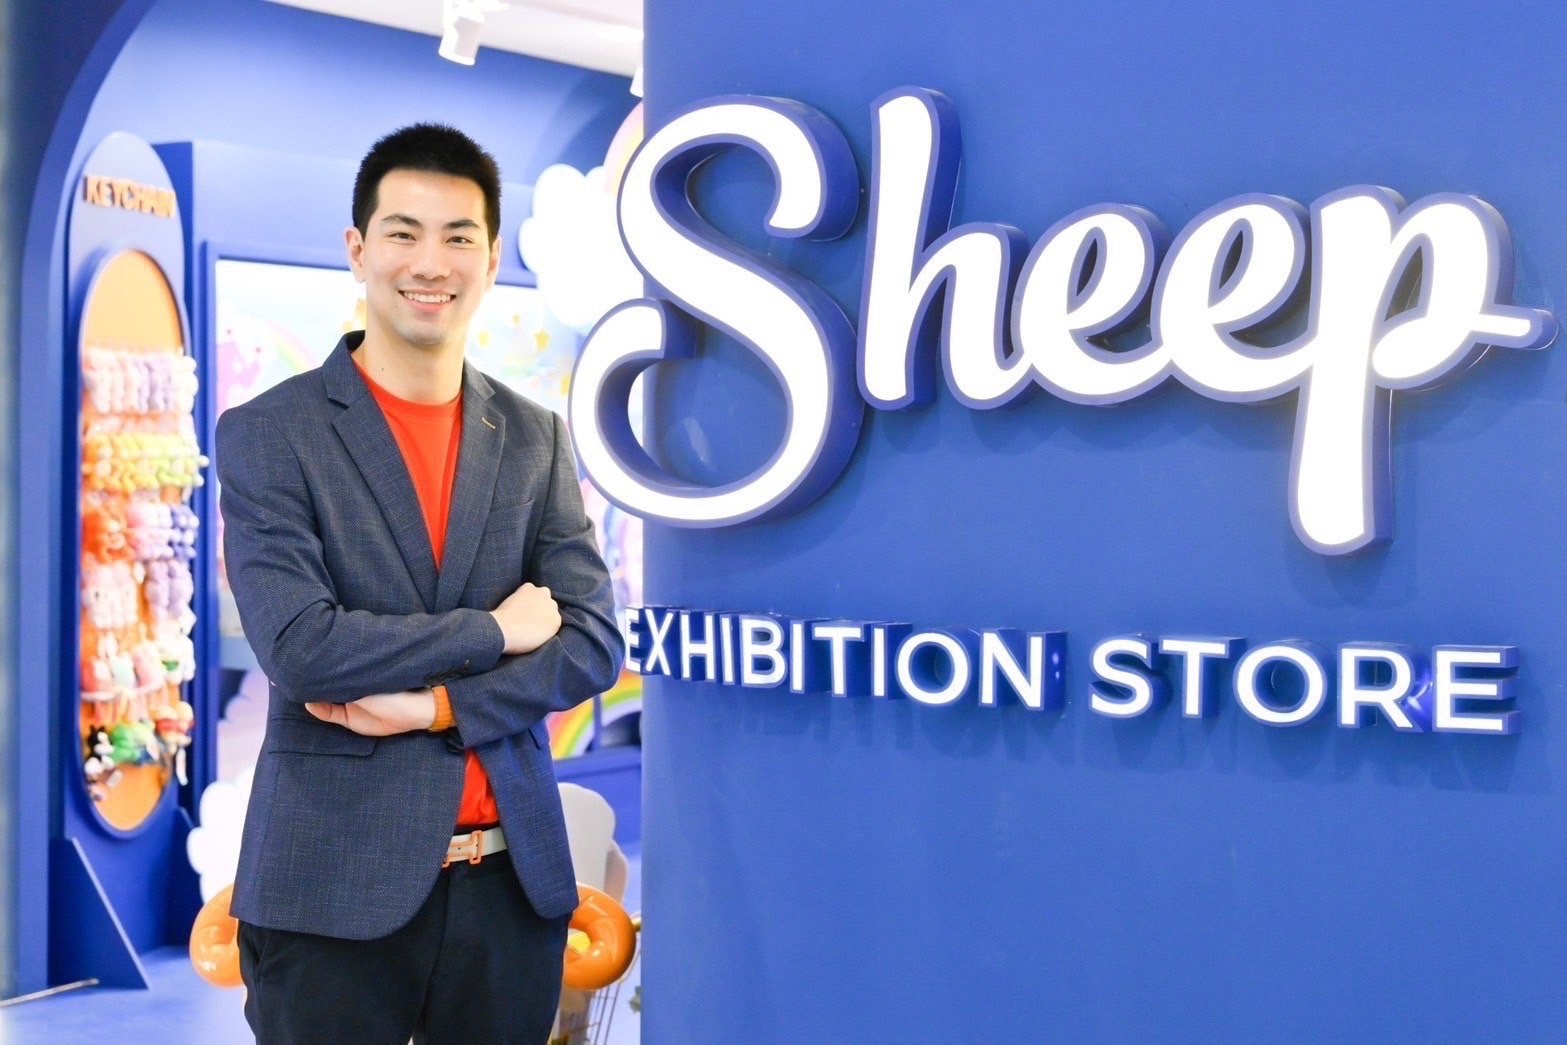 Sheep เปิดบ้าน Sheep Exhibition Store ต้อนรับ Esther Bunny กระต่ายแดนกิมจิ